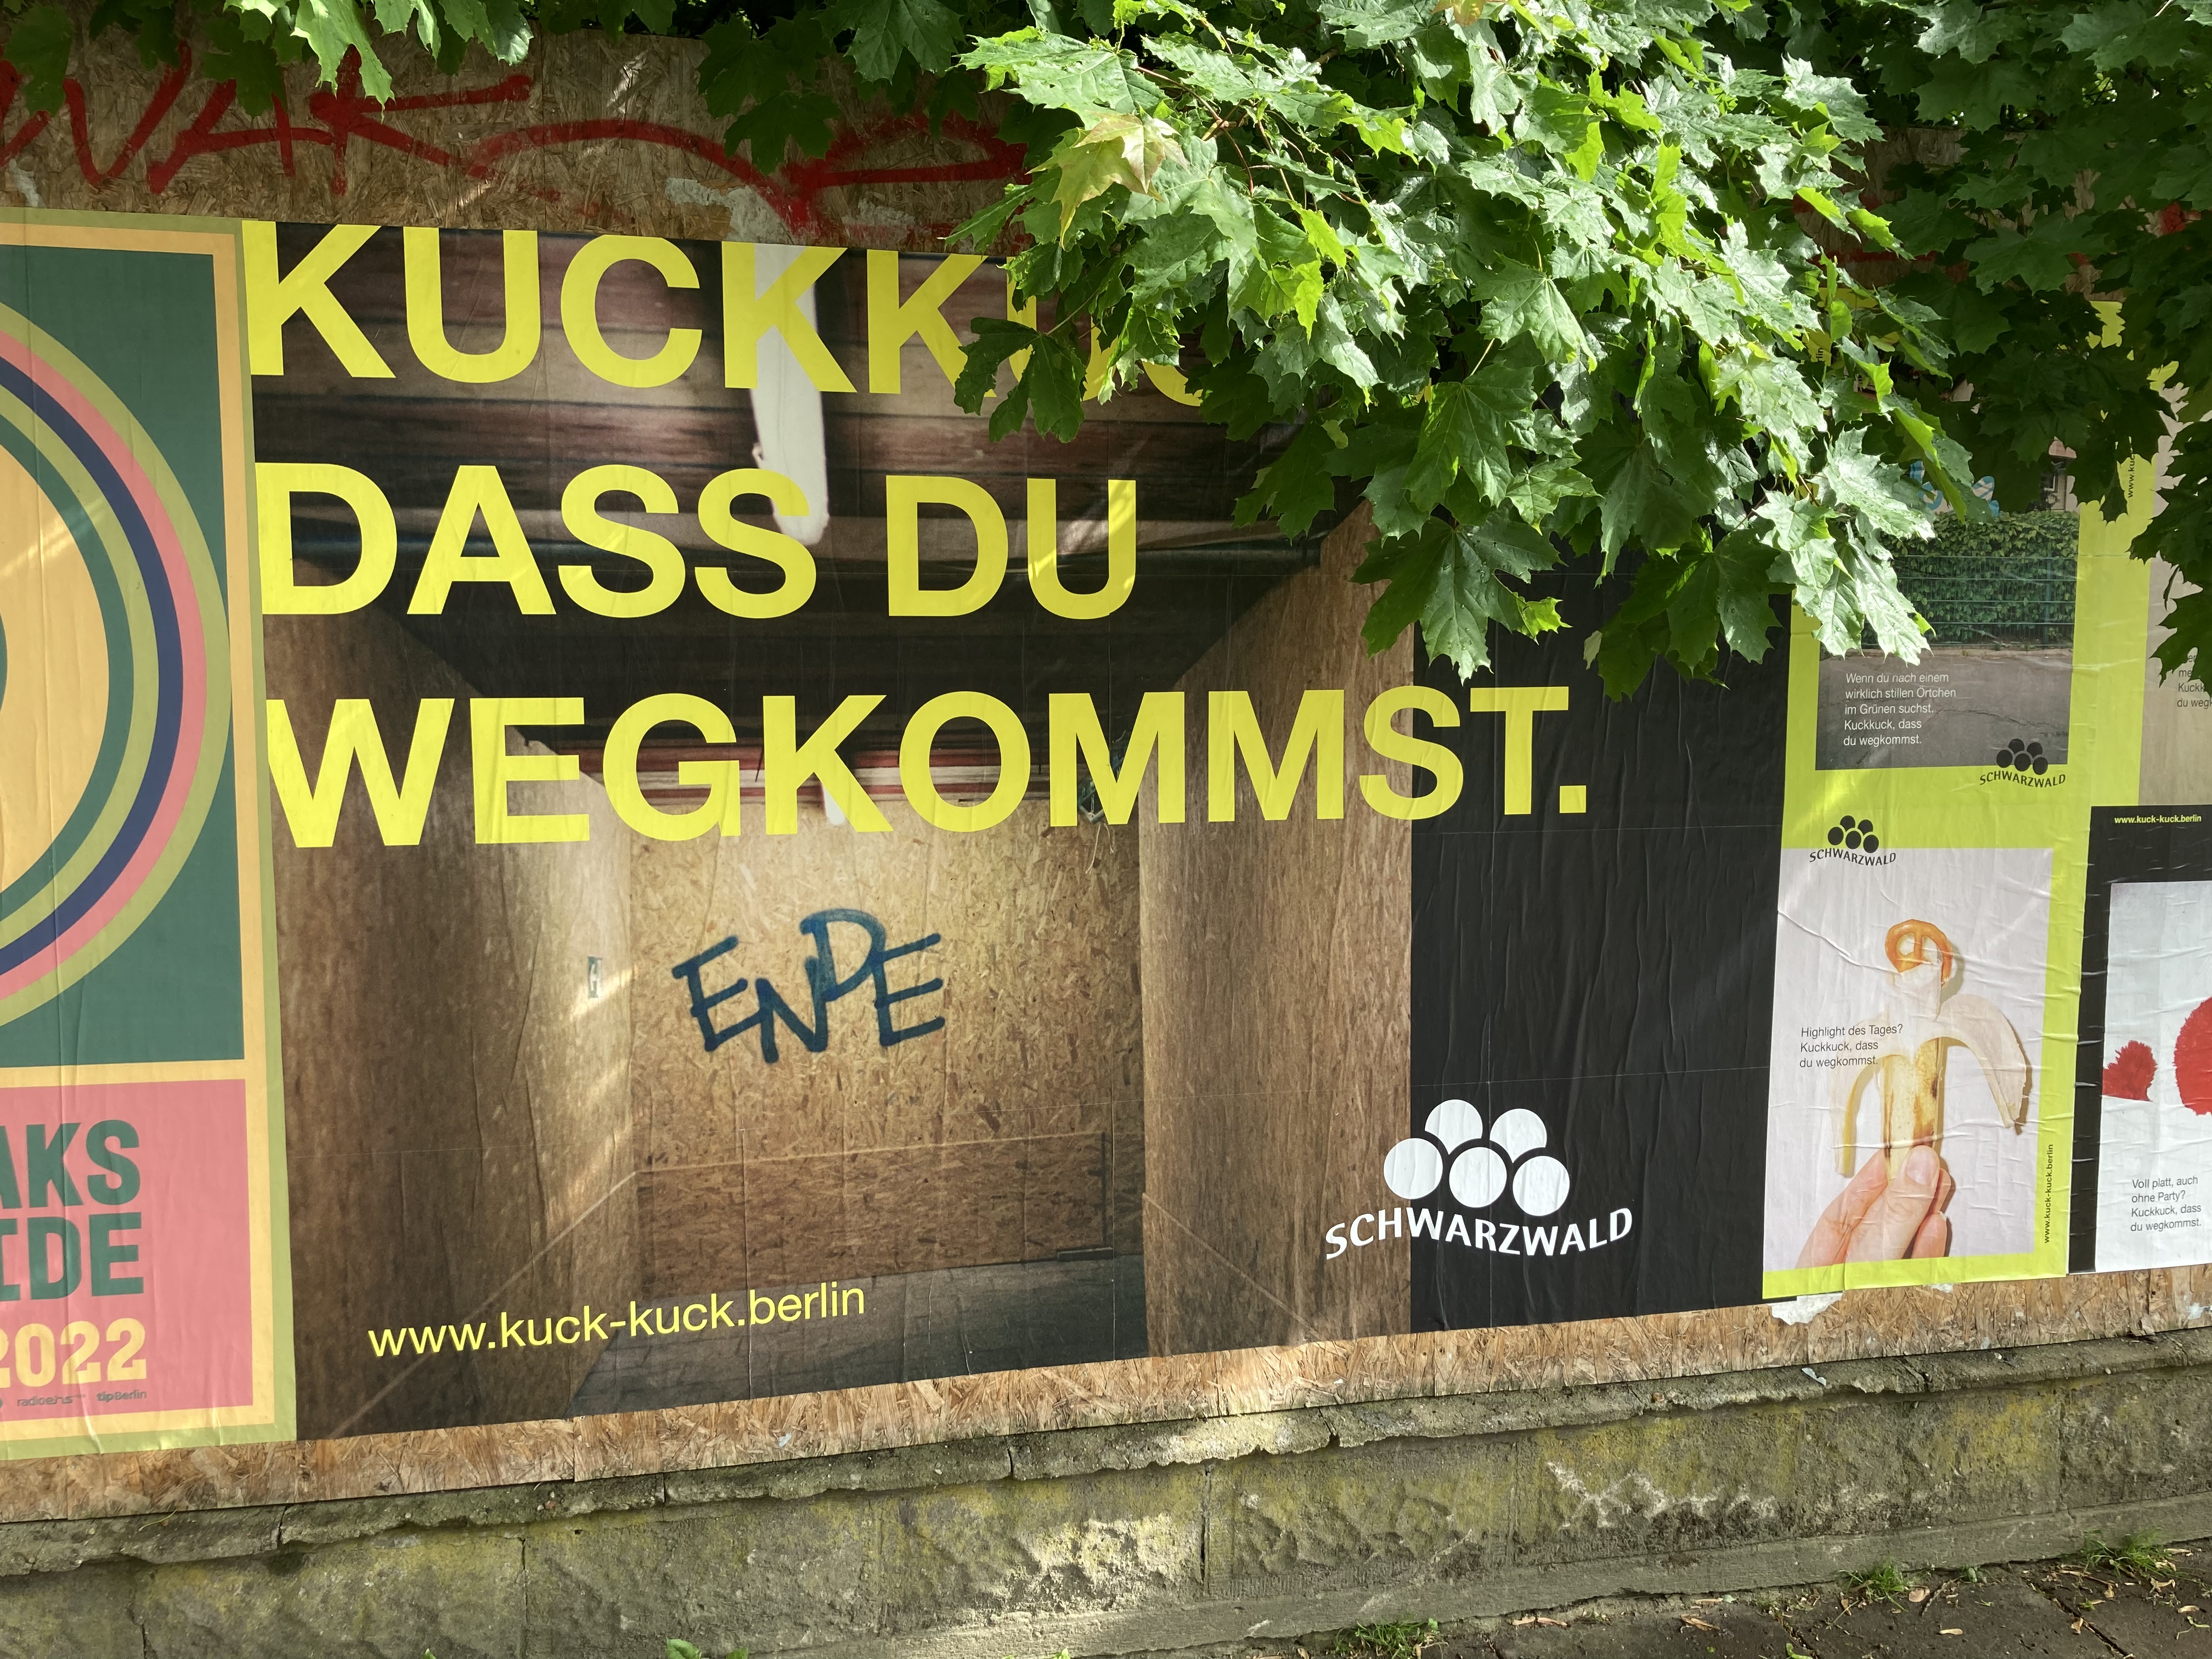 Plakatwerbung in Berlin, trotz Corona